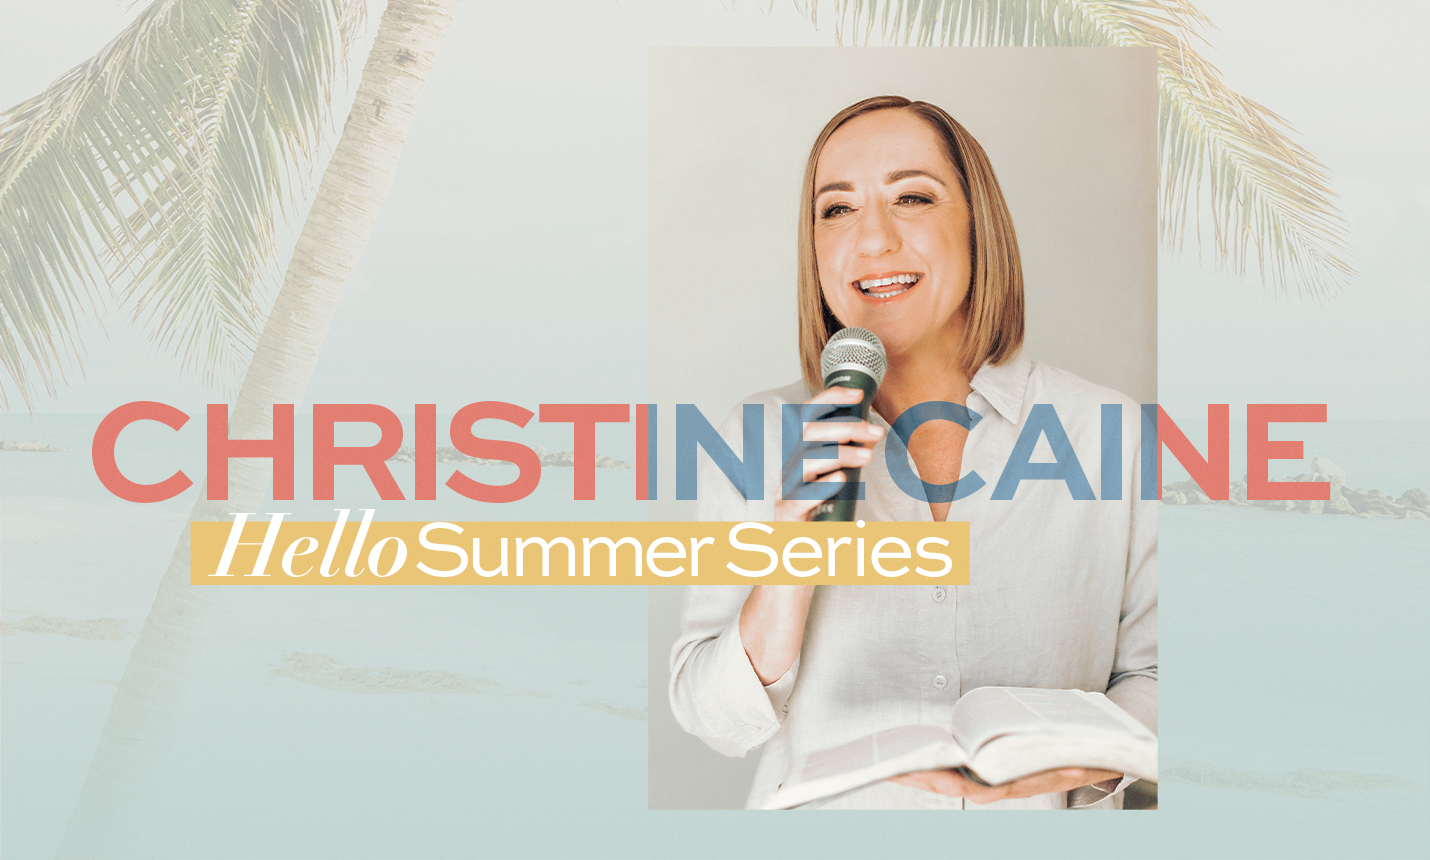 Christine Caine Hello Summer Series